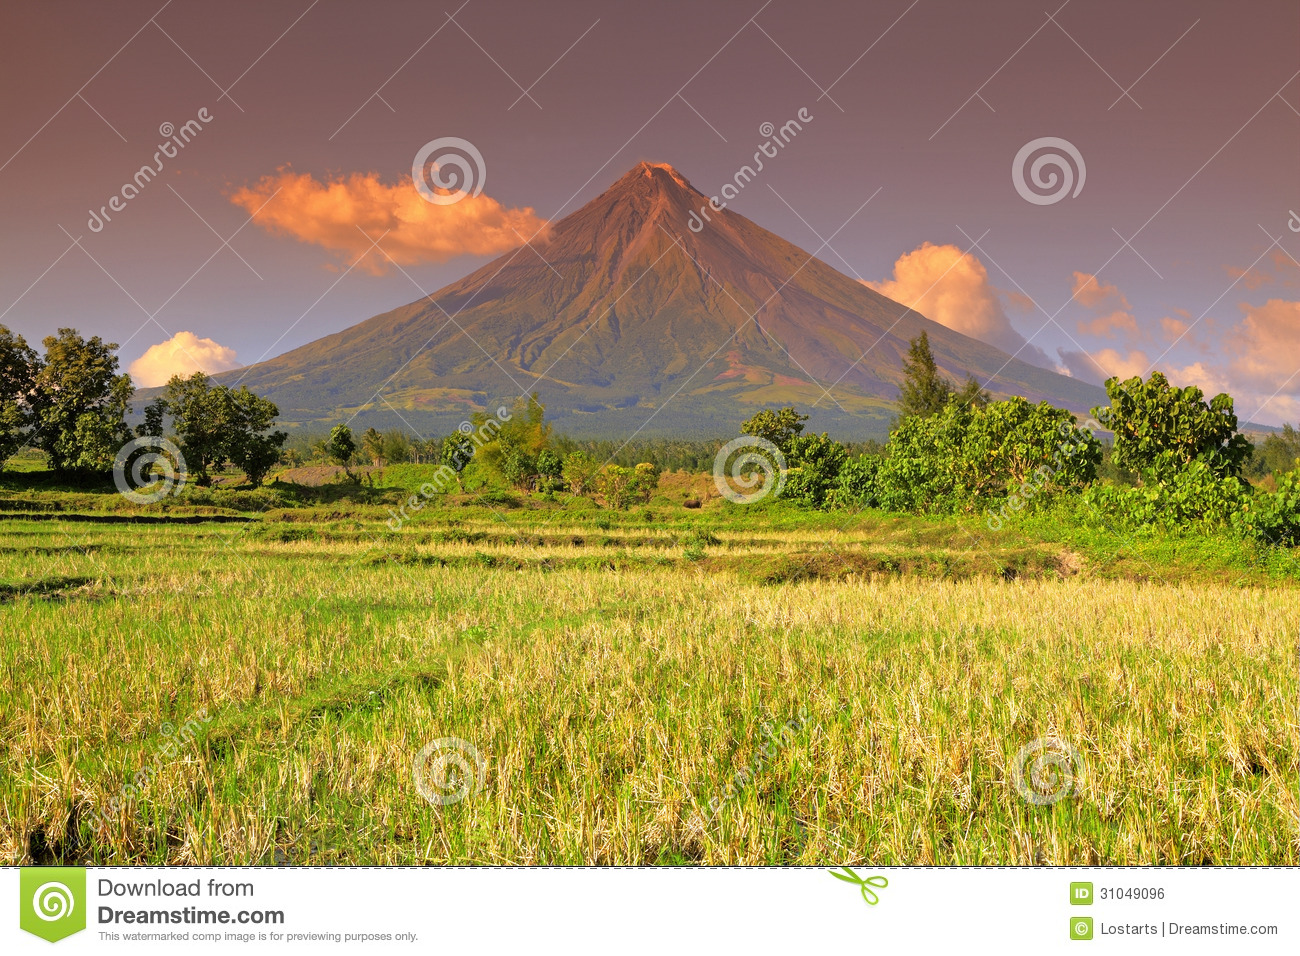 Philippines   Mayon Volcano Royalty Free Stock Image   Image  31049096